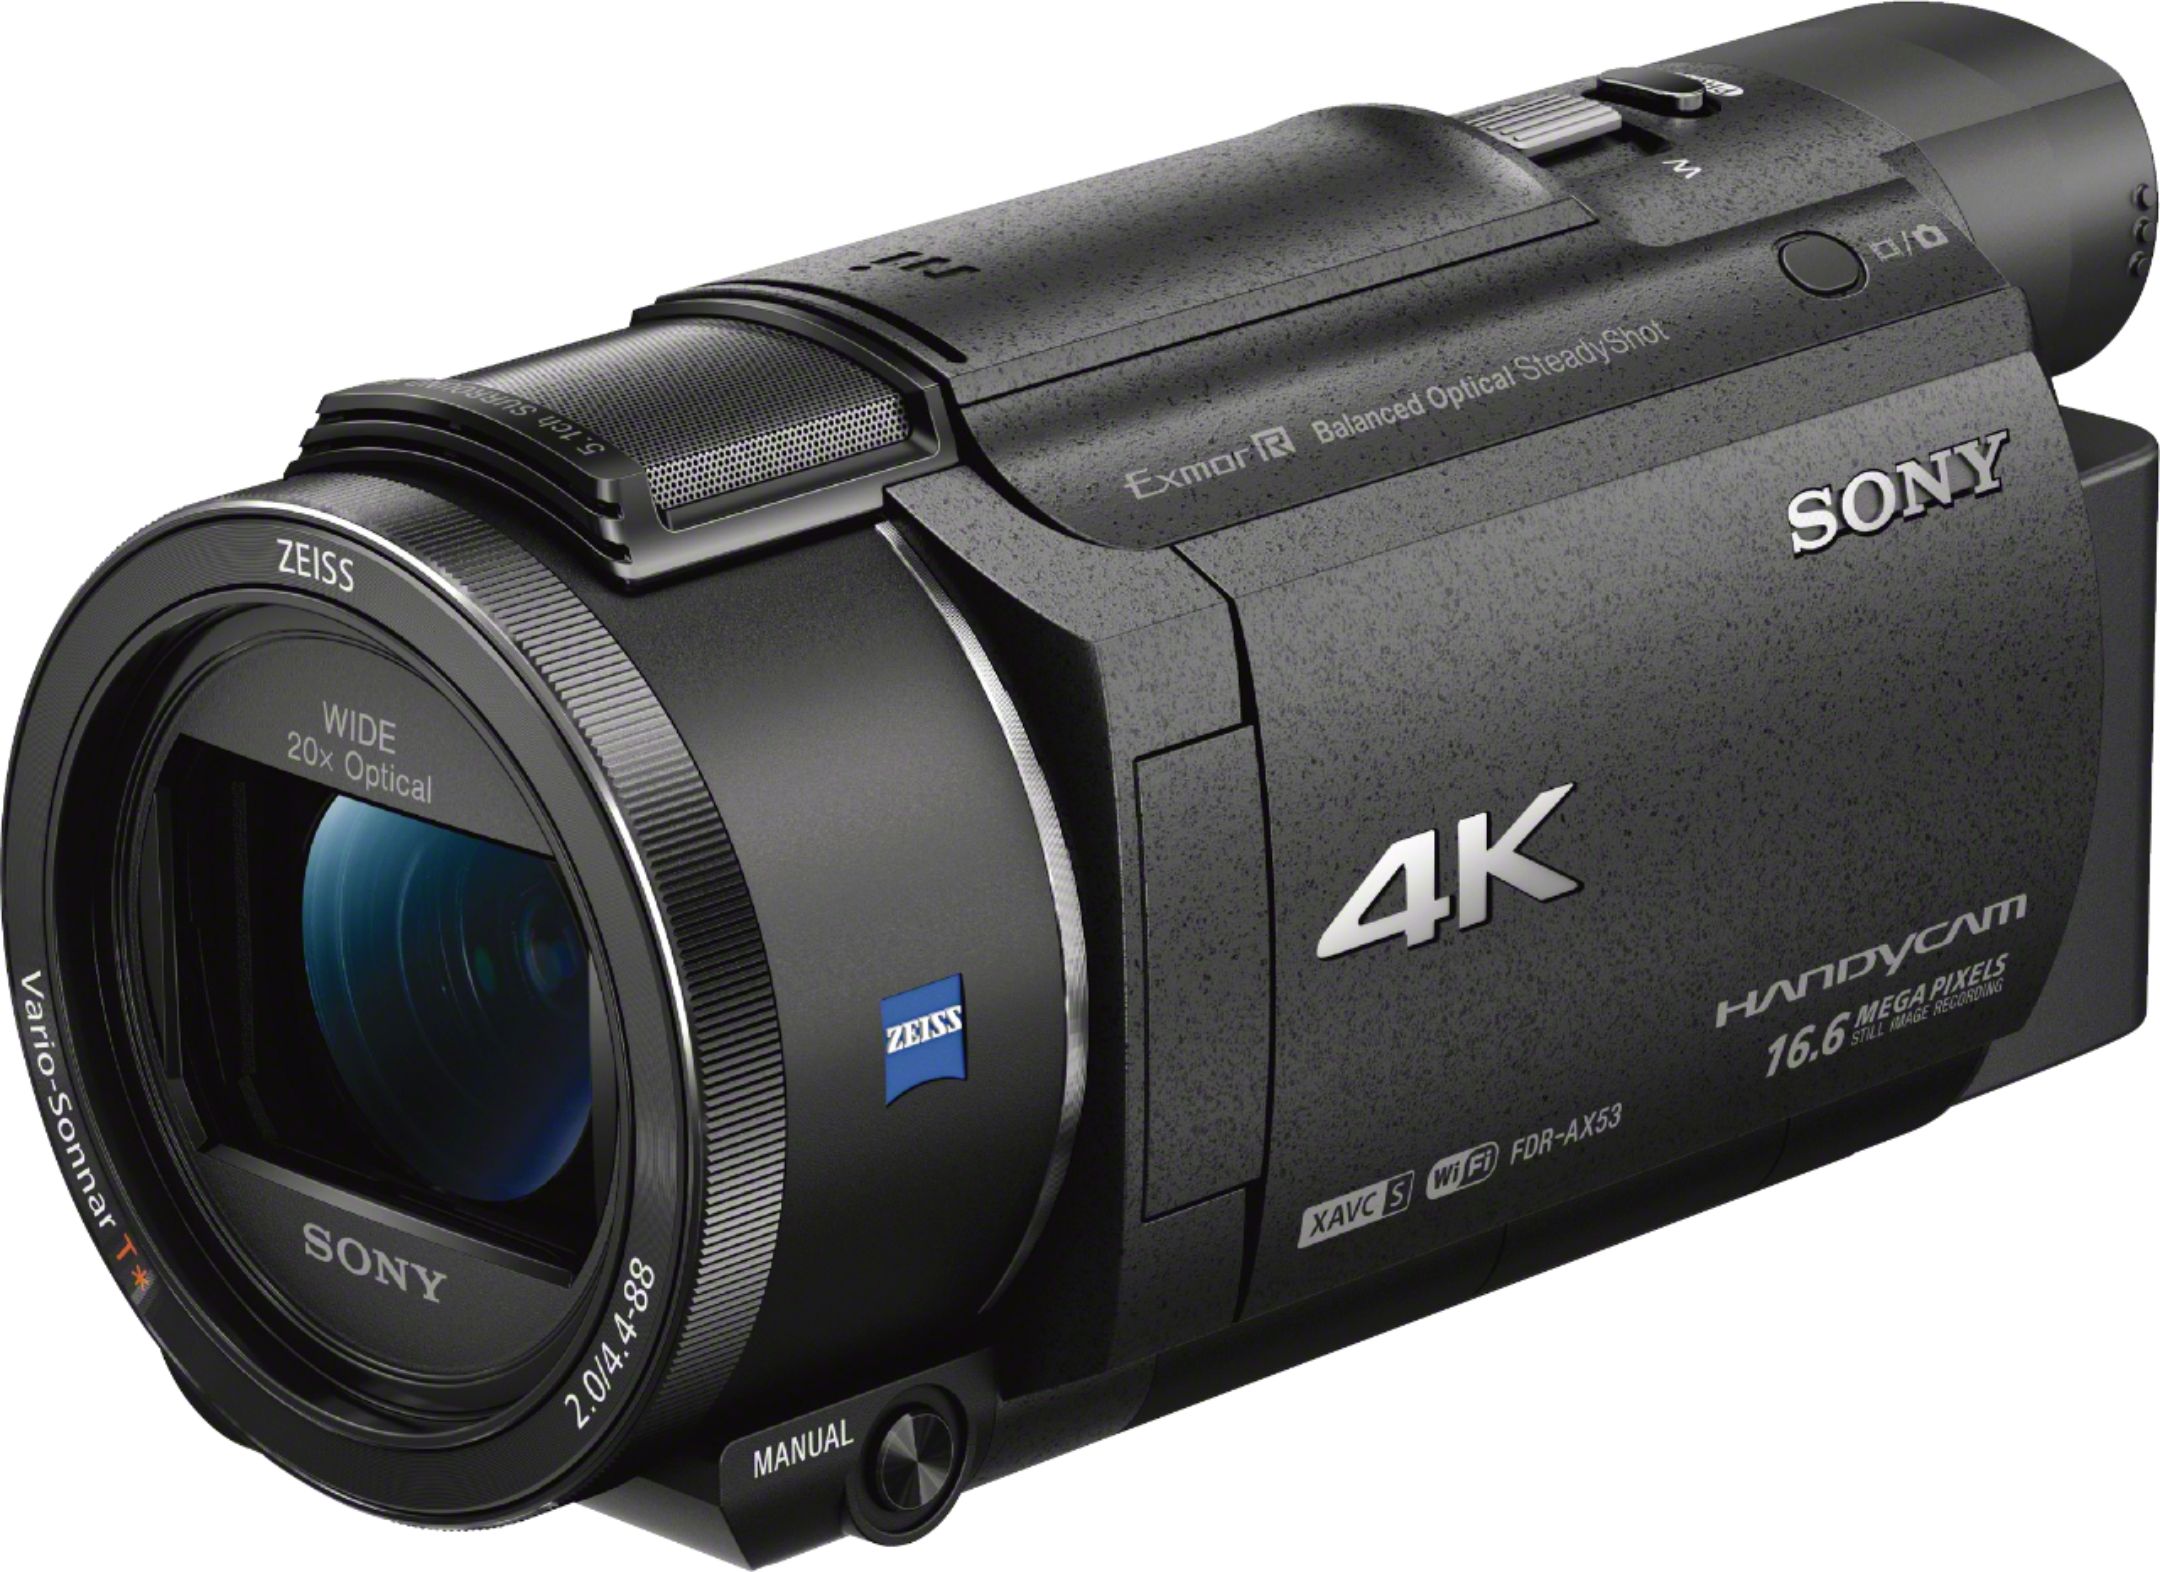 Sony Handycam AX53 4K Flash Memory Premium Camcorder Black FDRAX53